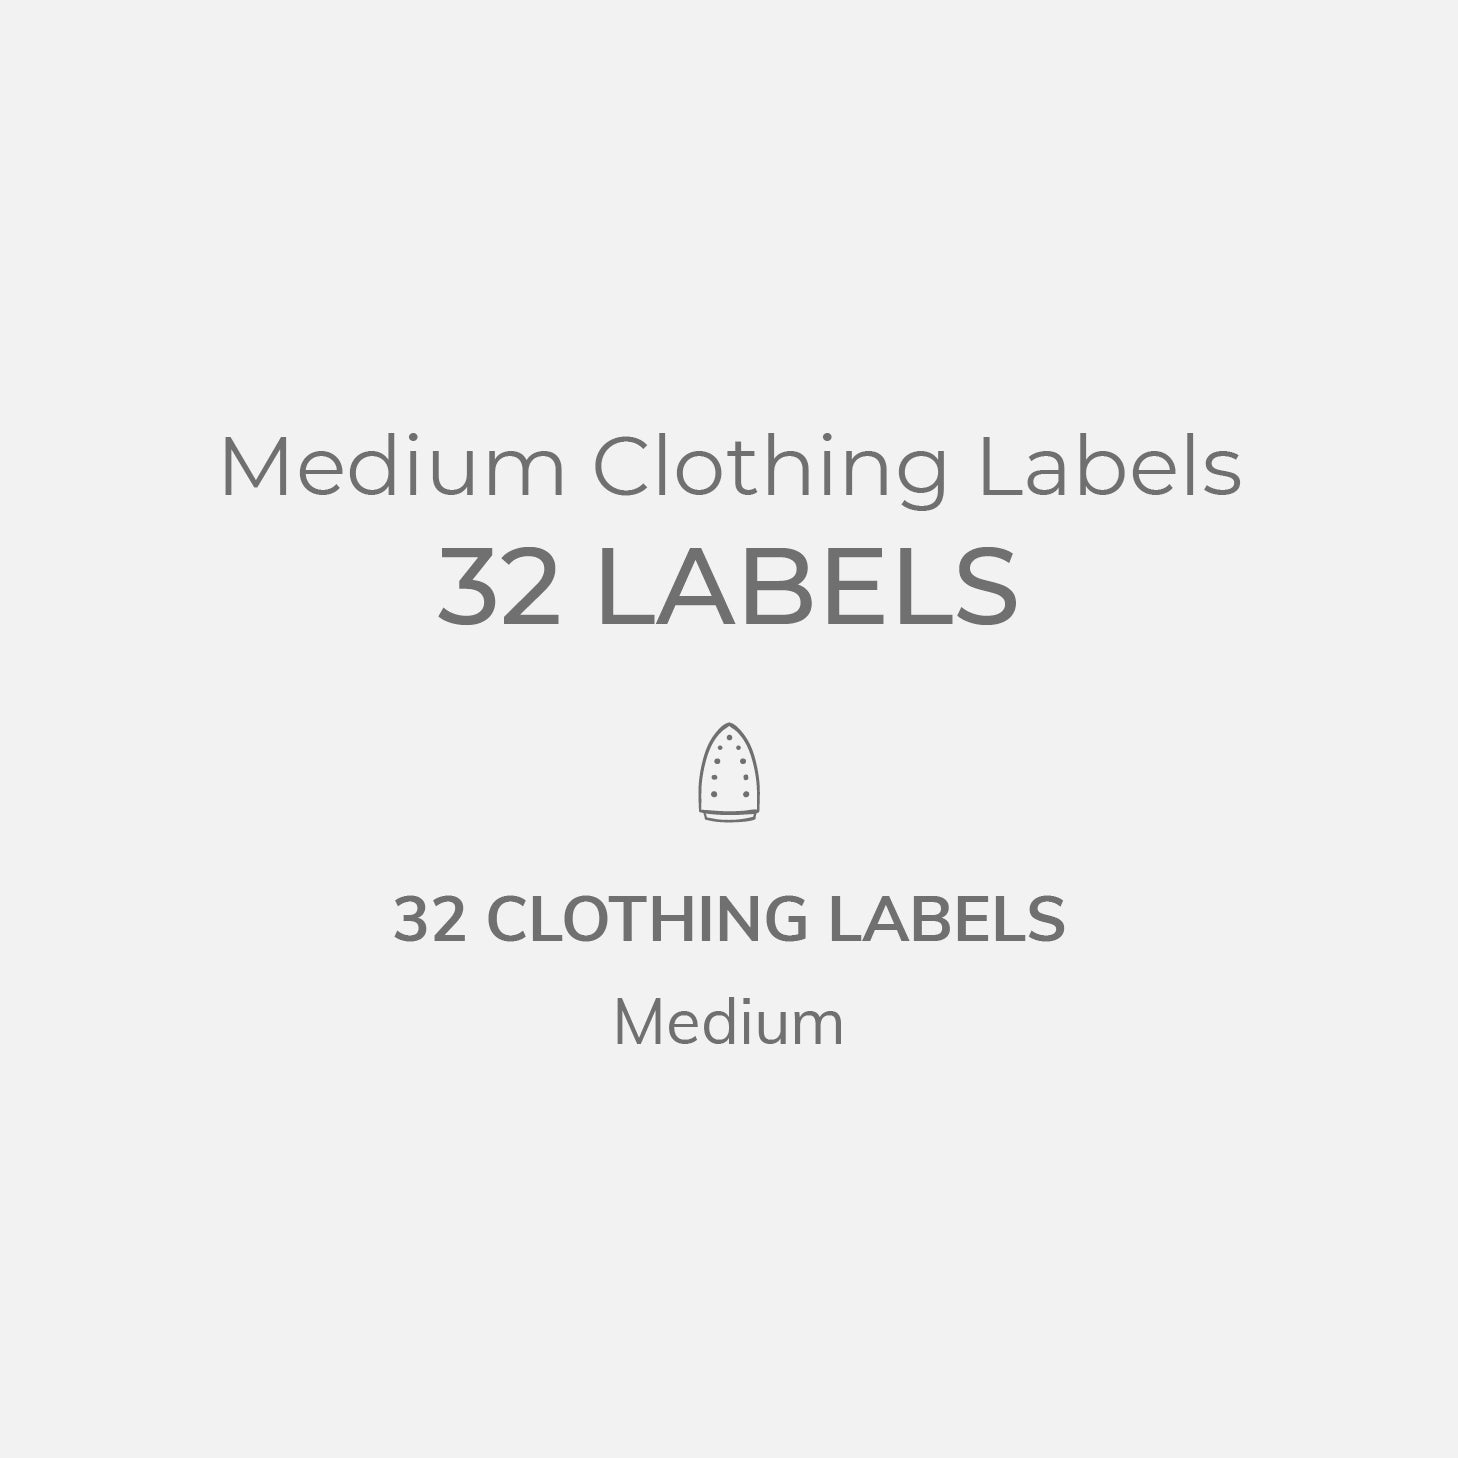 Medium Clothing Labels, Clothing Labels